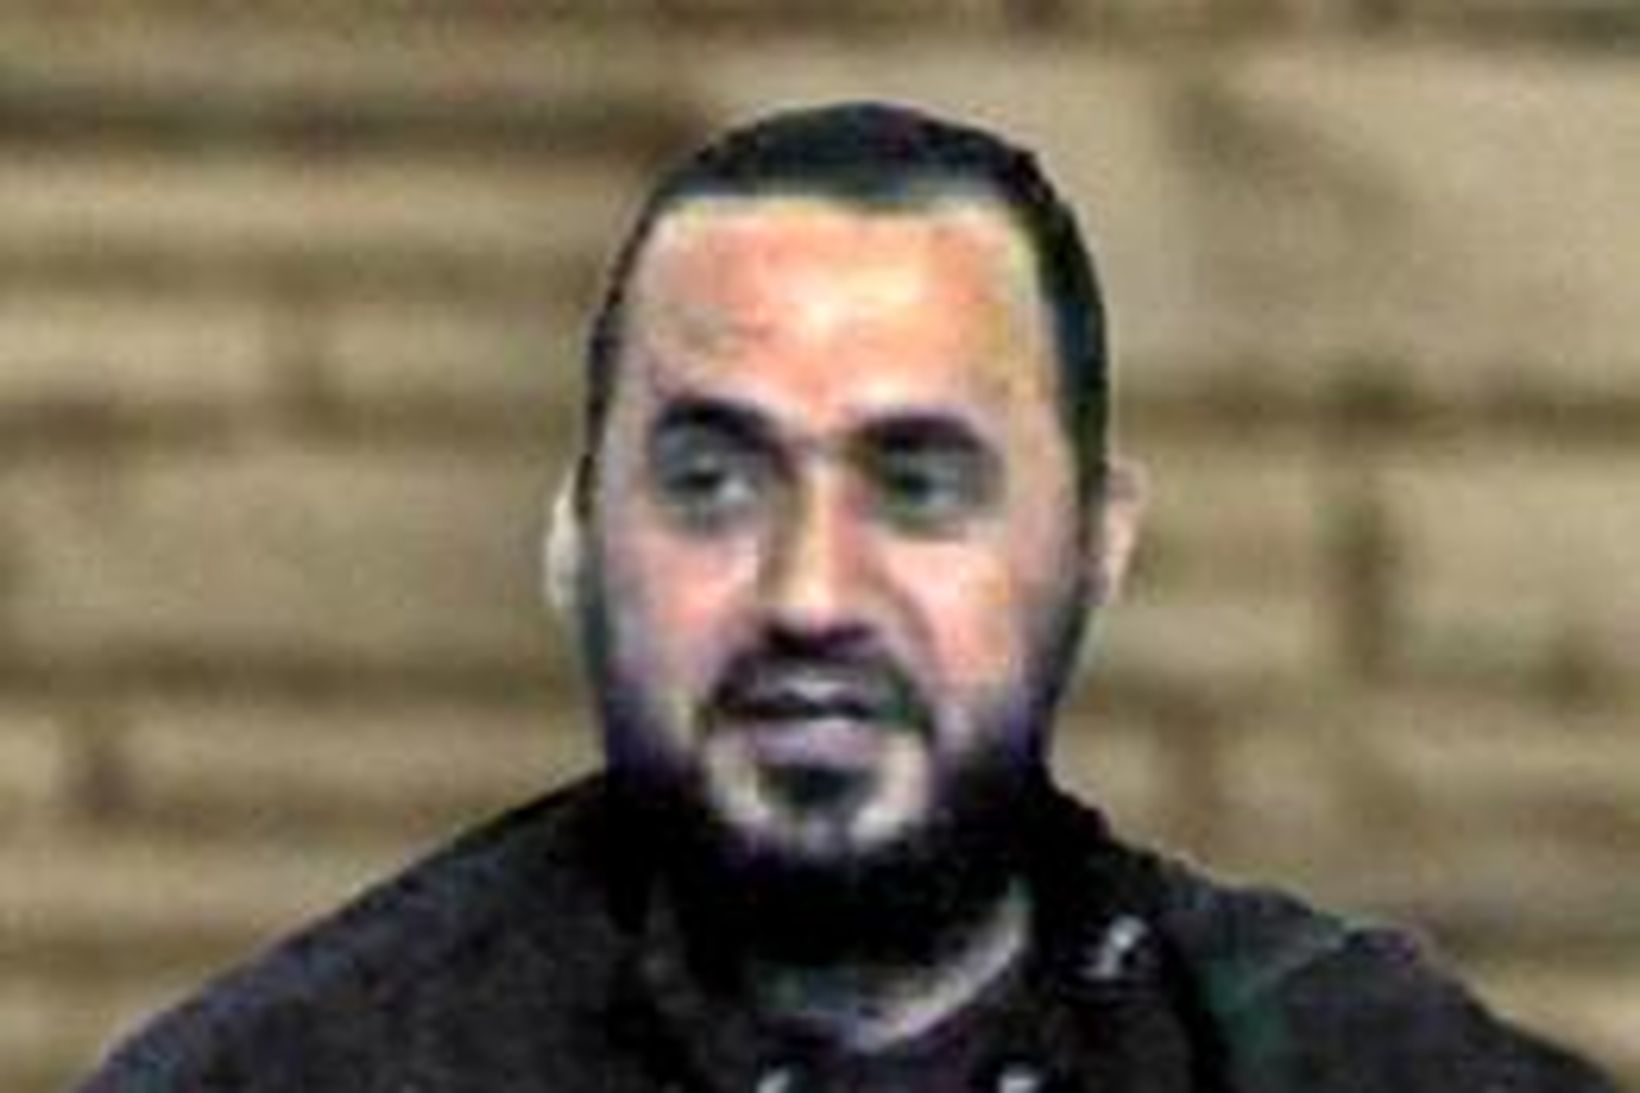 Abu Musab al-Zarqawi.